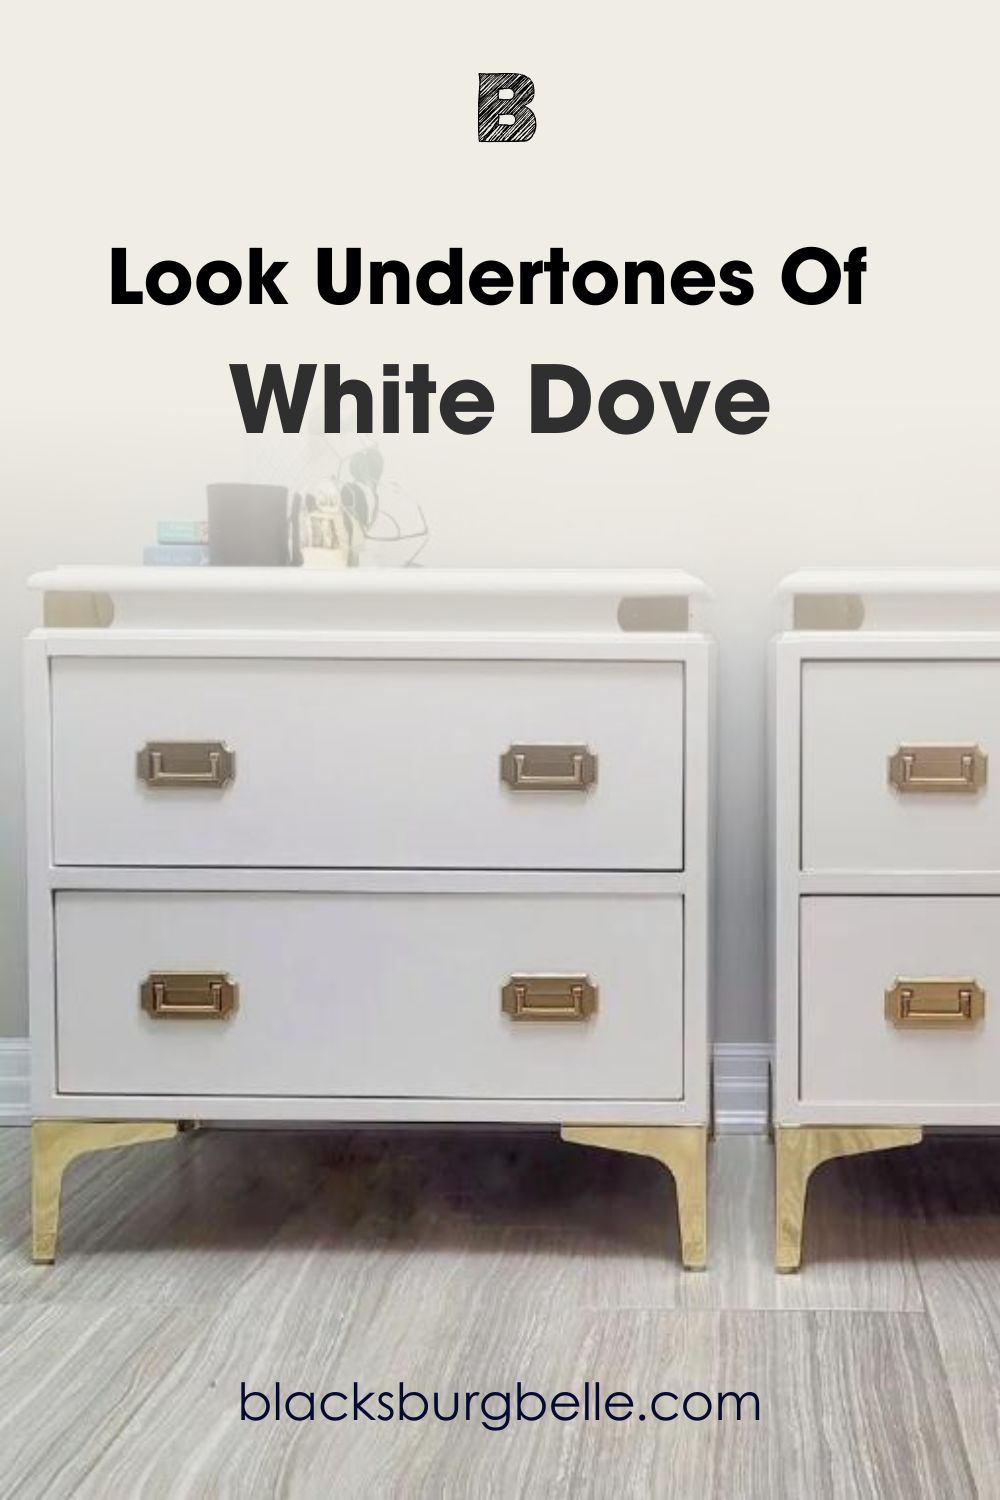 A Closer Look at White Dove’s Undertones